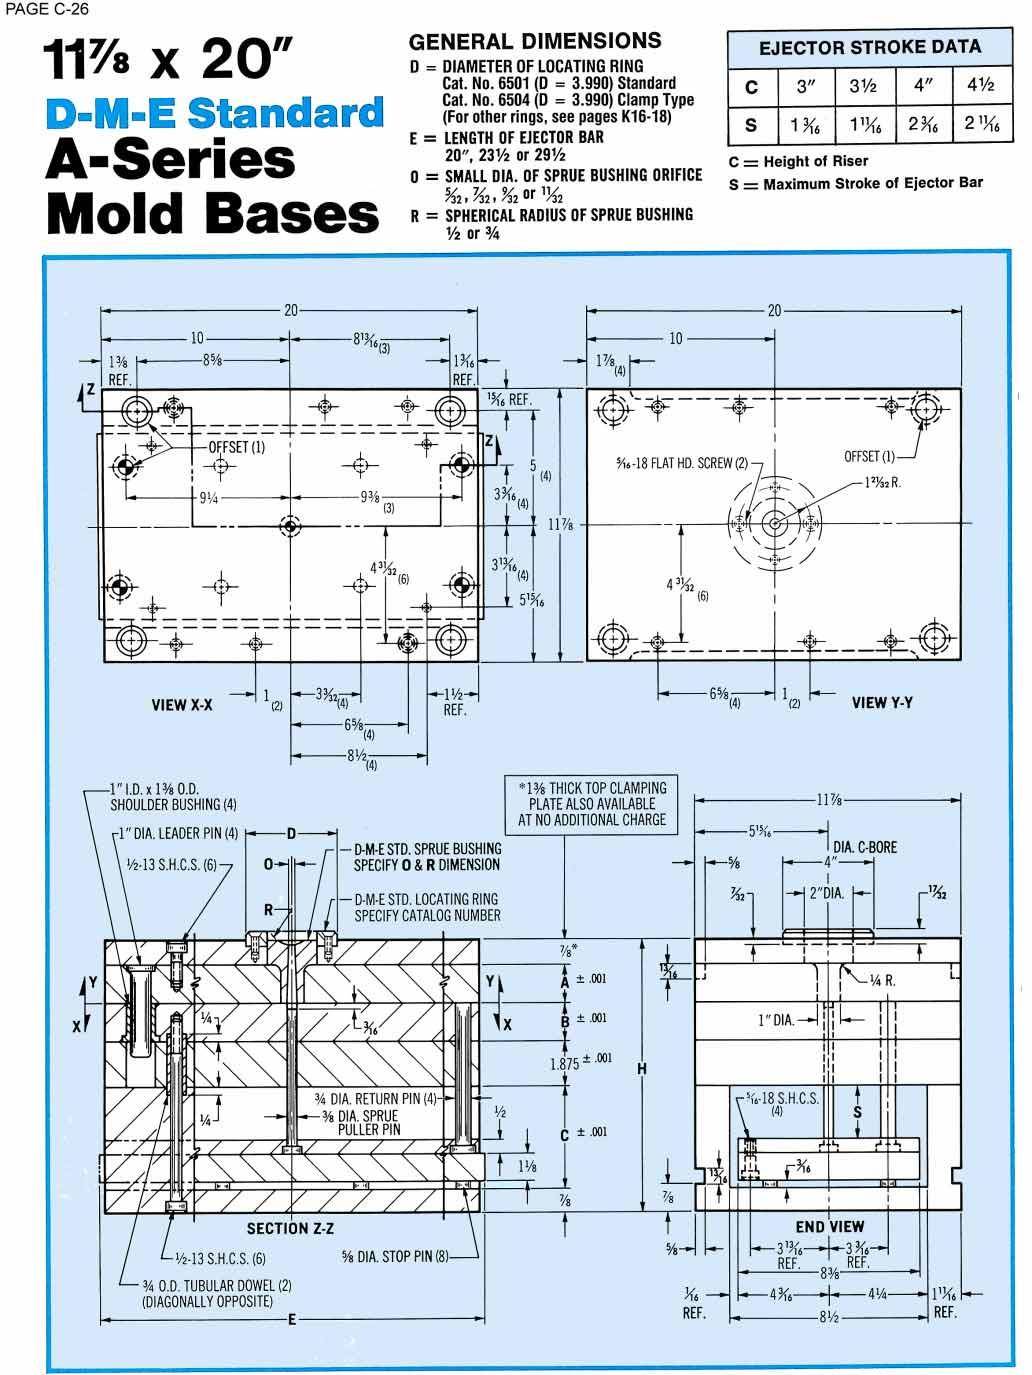 DME A series mold base 1220A